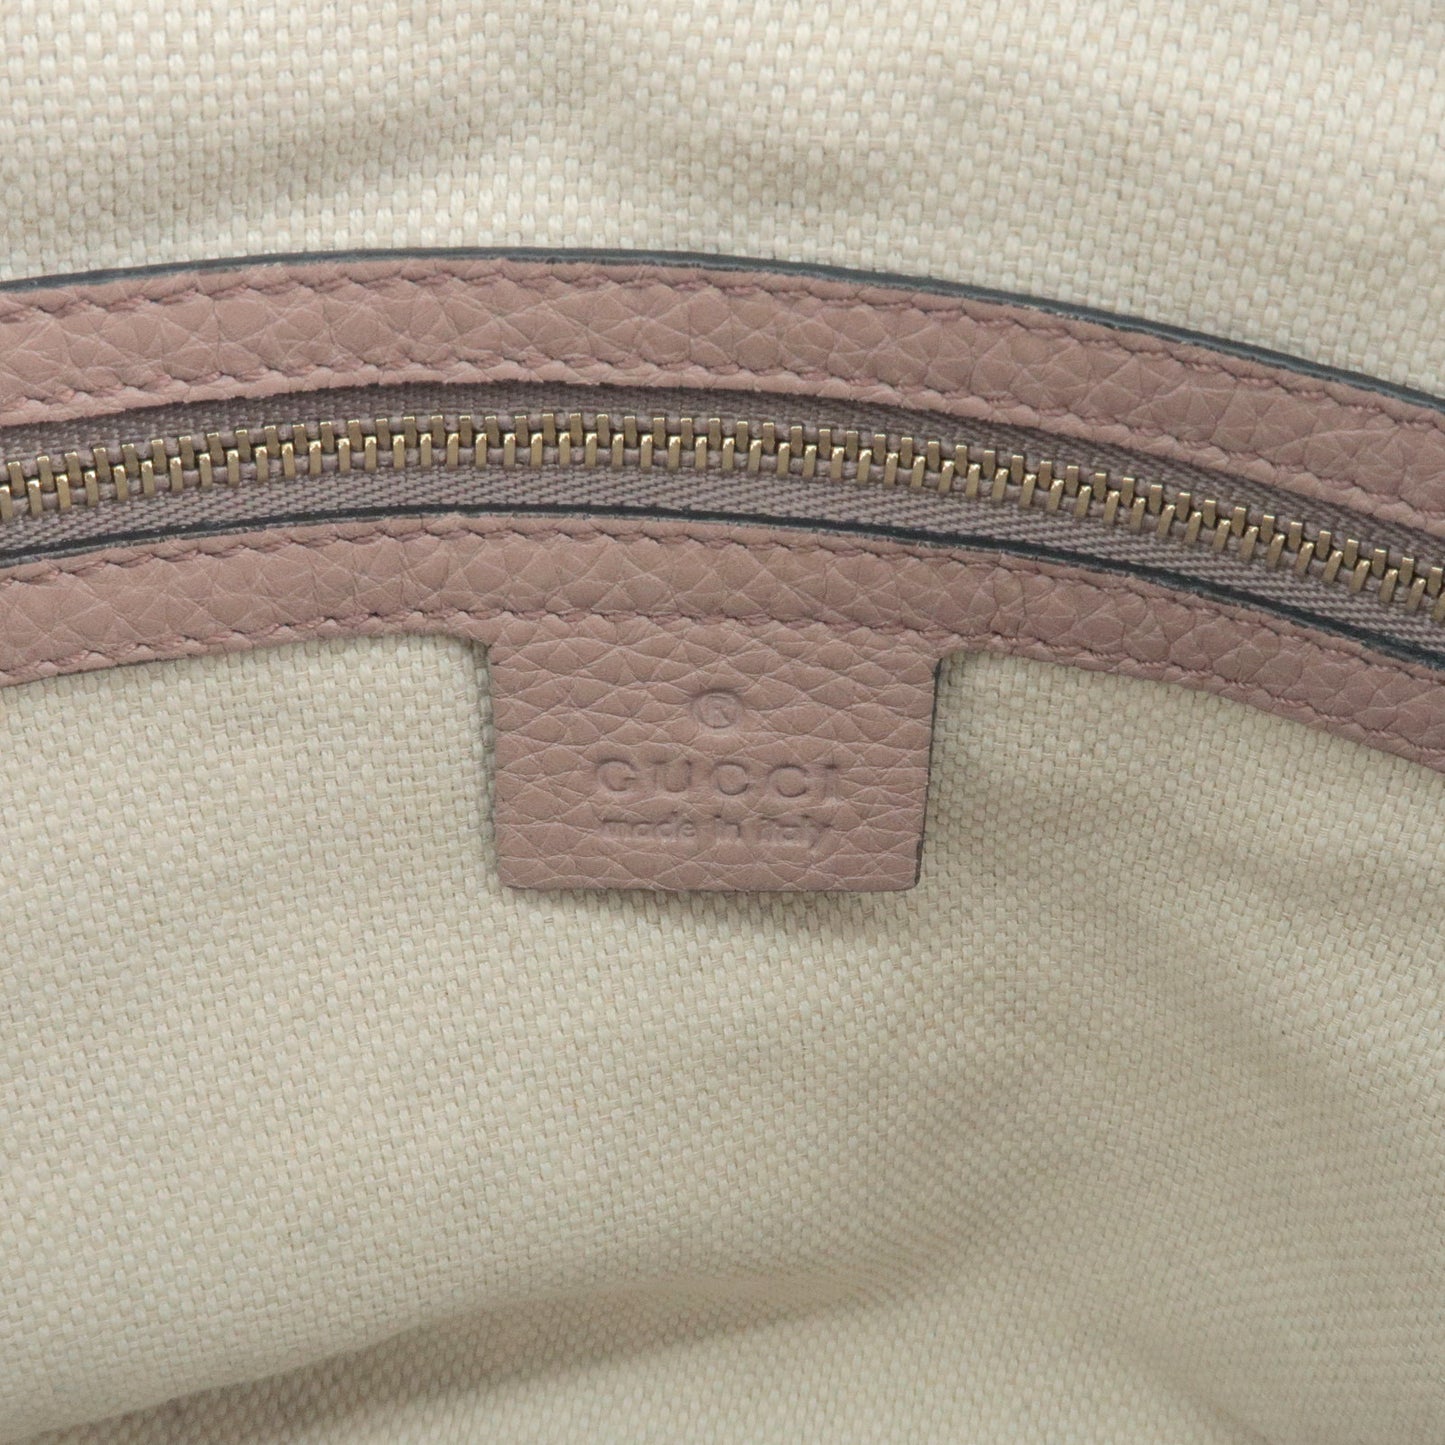 GUCCI SOHO Interlocking G Leather 2Way Hand Bag Pink 369176